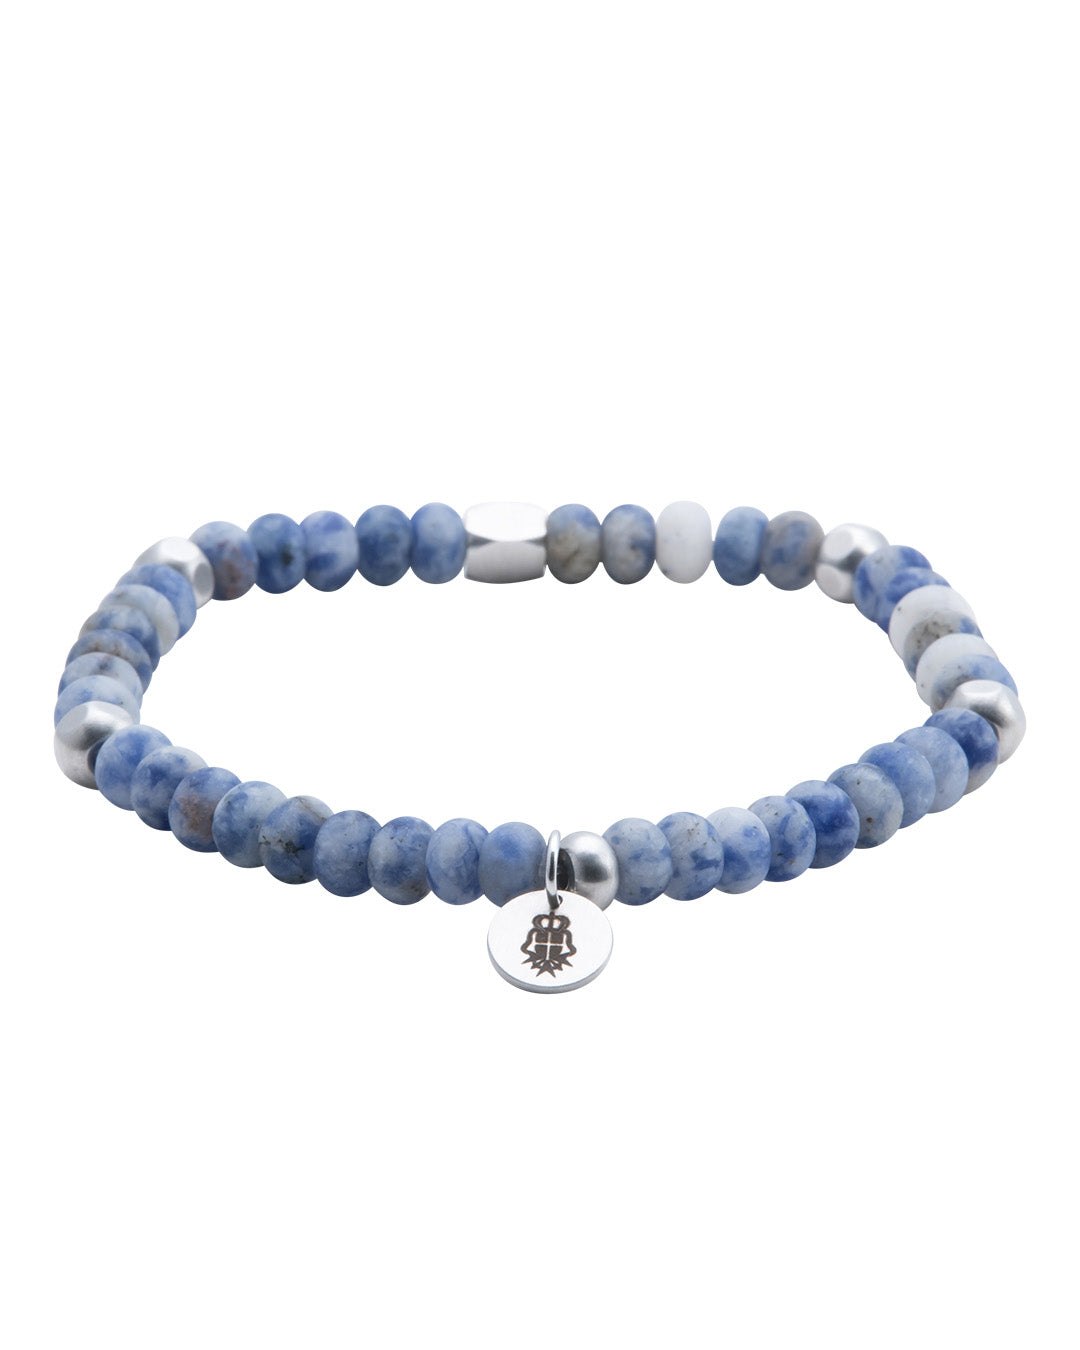 Blue Jasper Stone Bead Bracelet With Charm